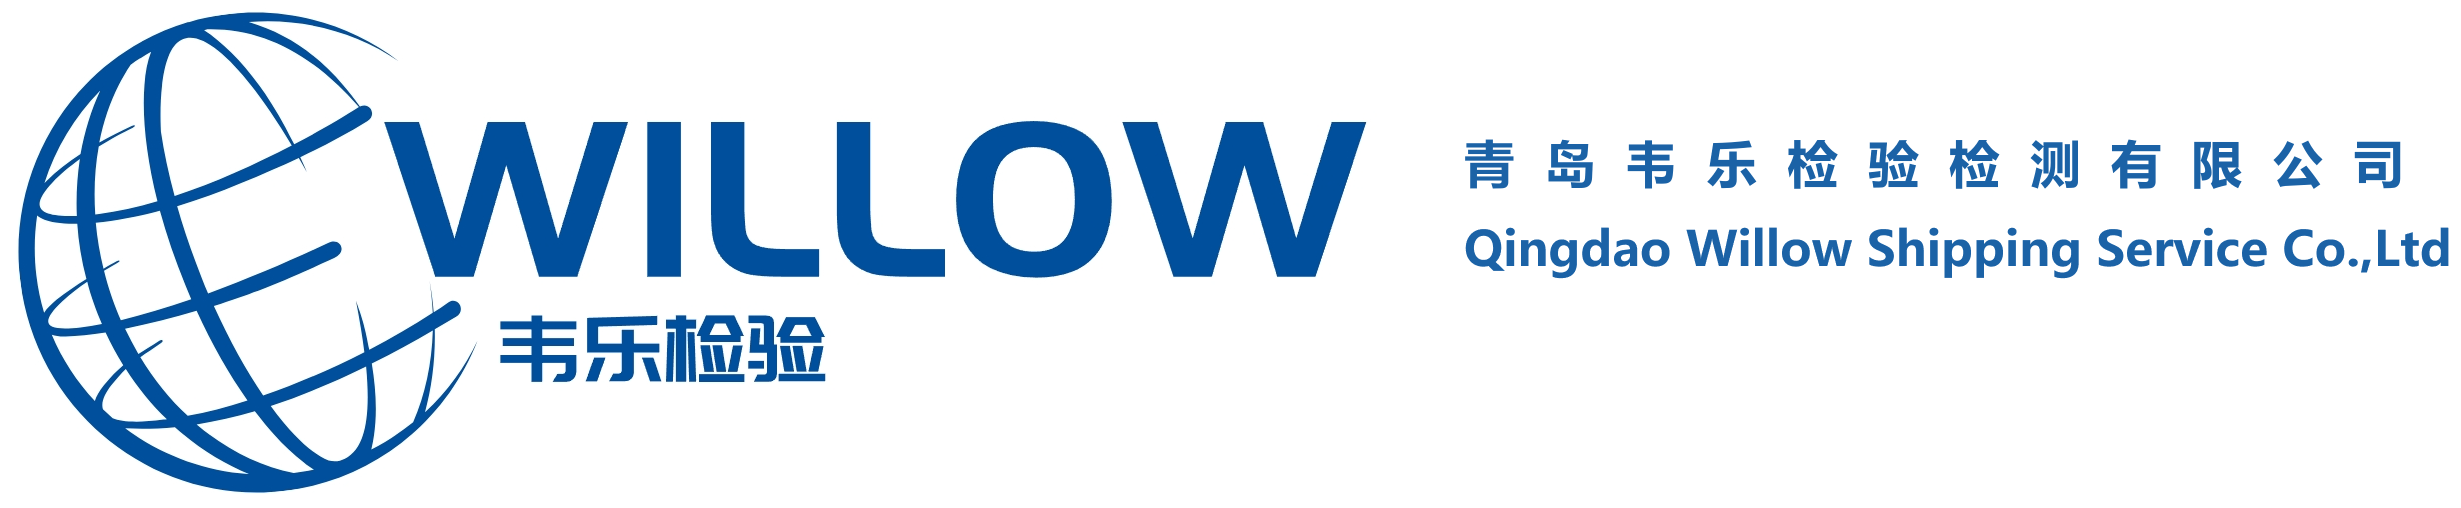 Qingdao Willow Shipping Service Co.,Ltd